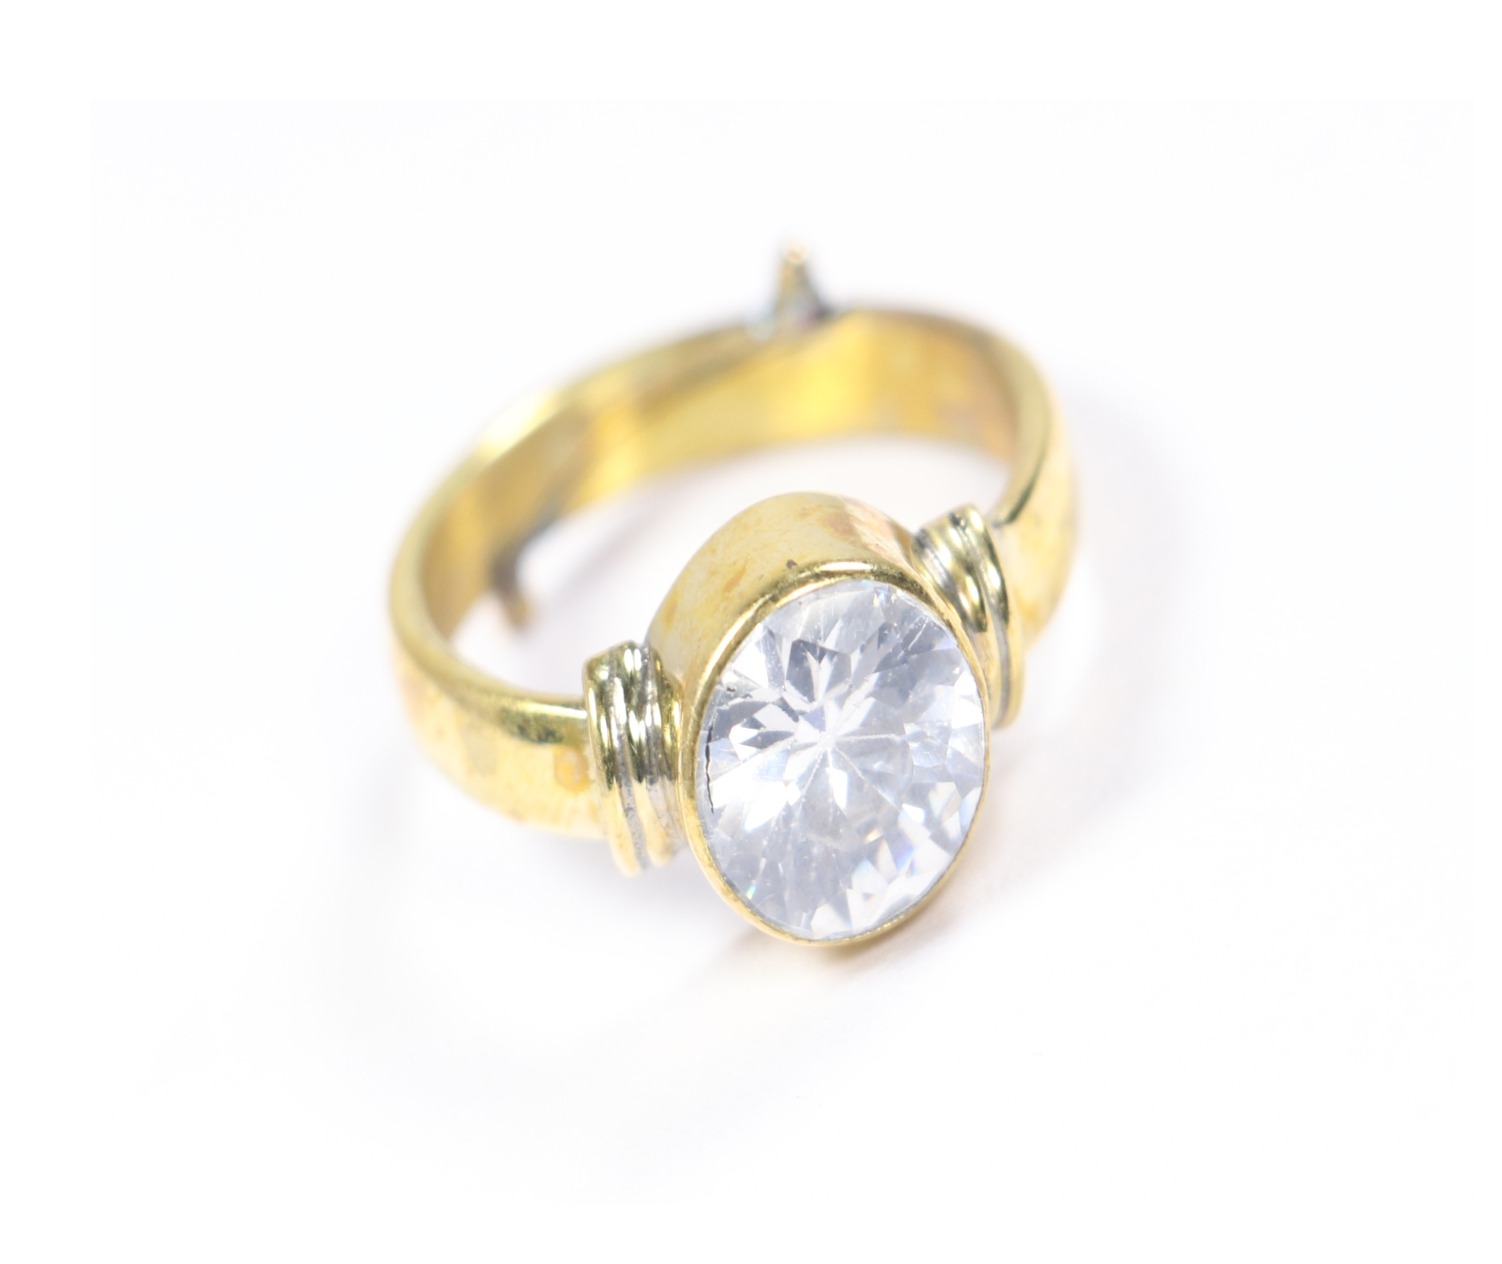 Cambodian Yellow Zircon, Natural White Zircon Ring in Platinum Over SS -  Size 9 | eBay